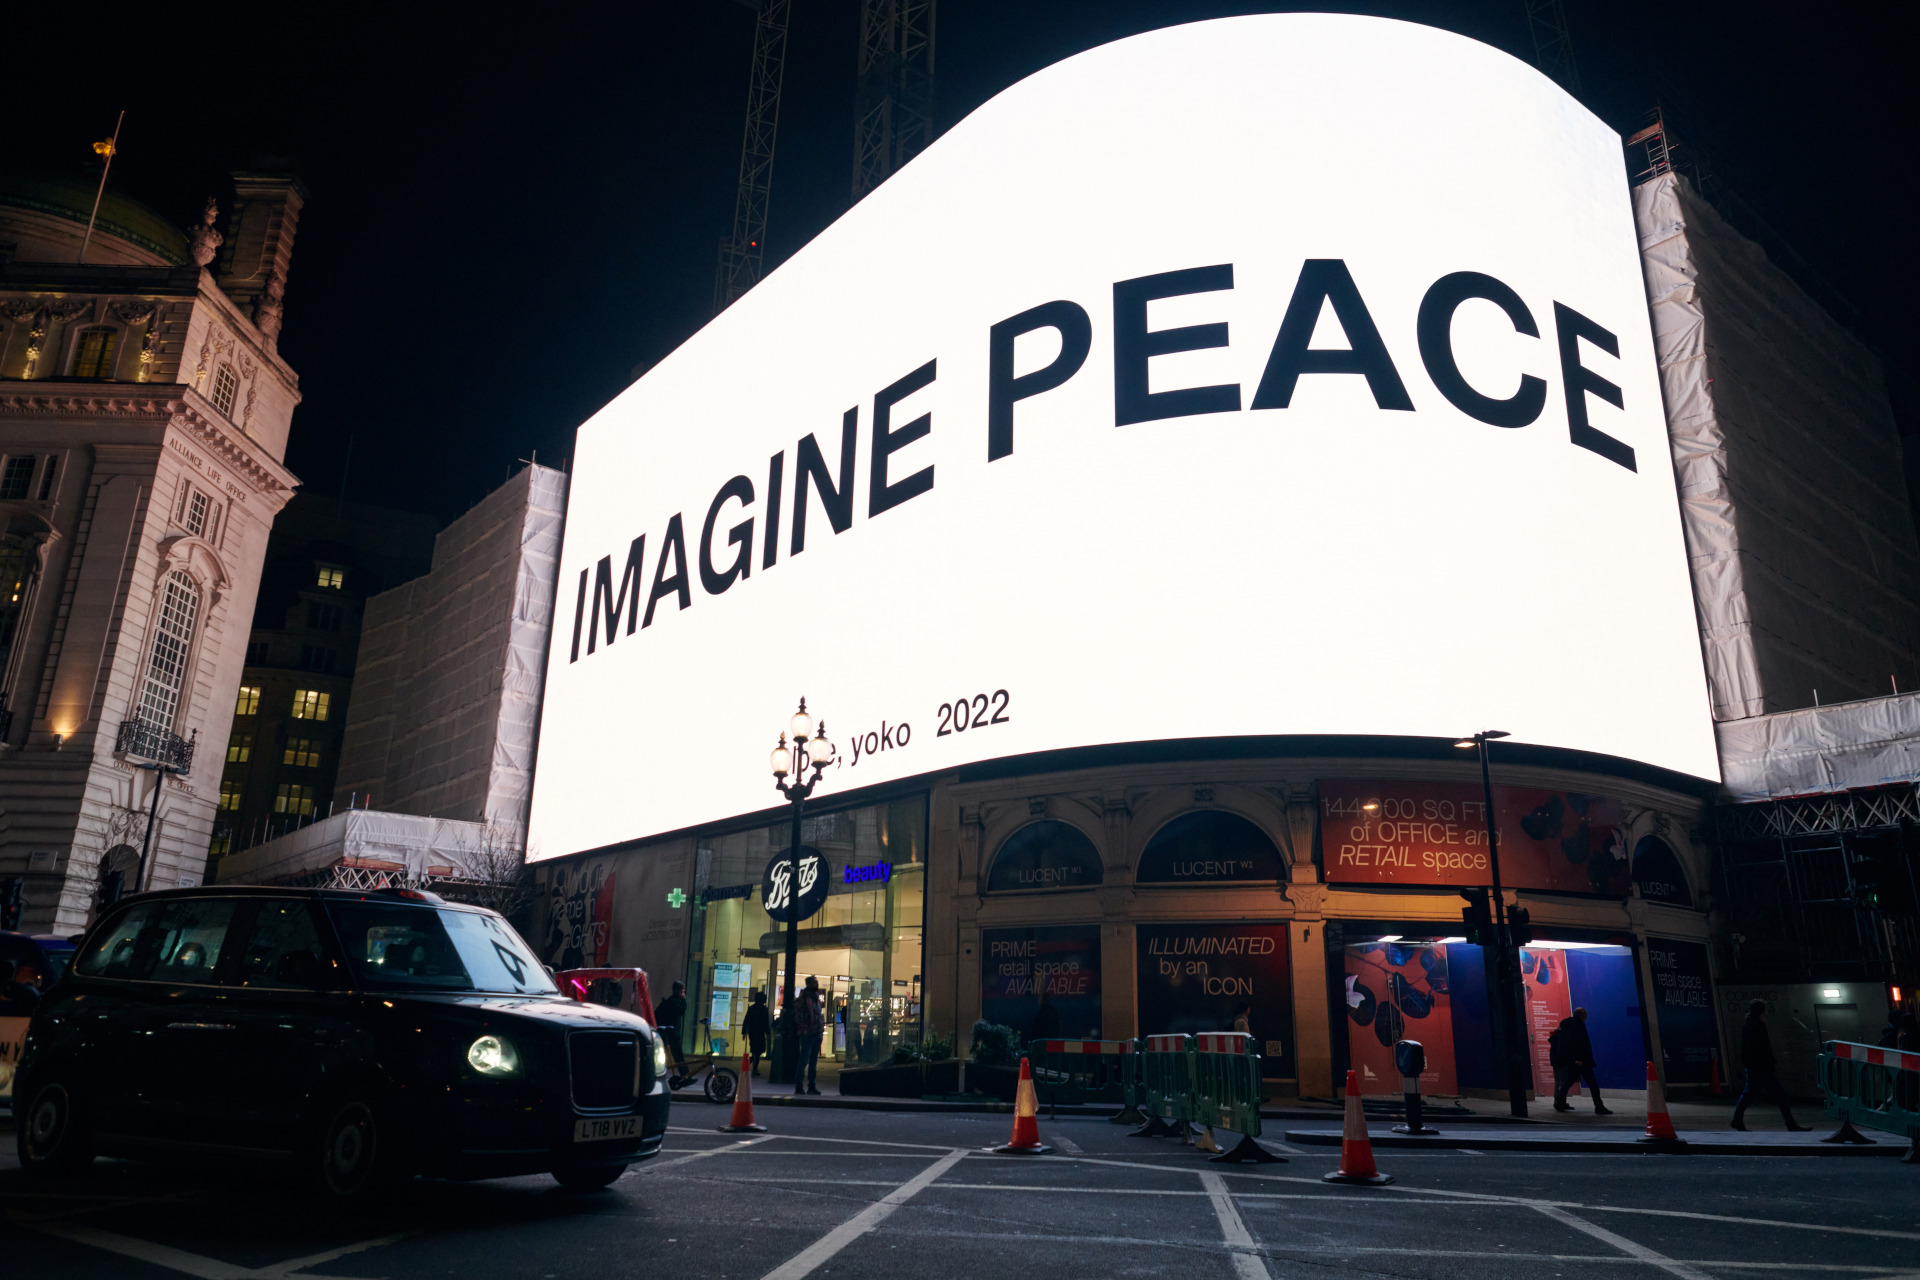 IMAGINE PEACE art installation by Yoko Ono& CIRCA, Piccadilly Circus